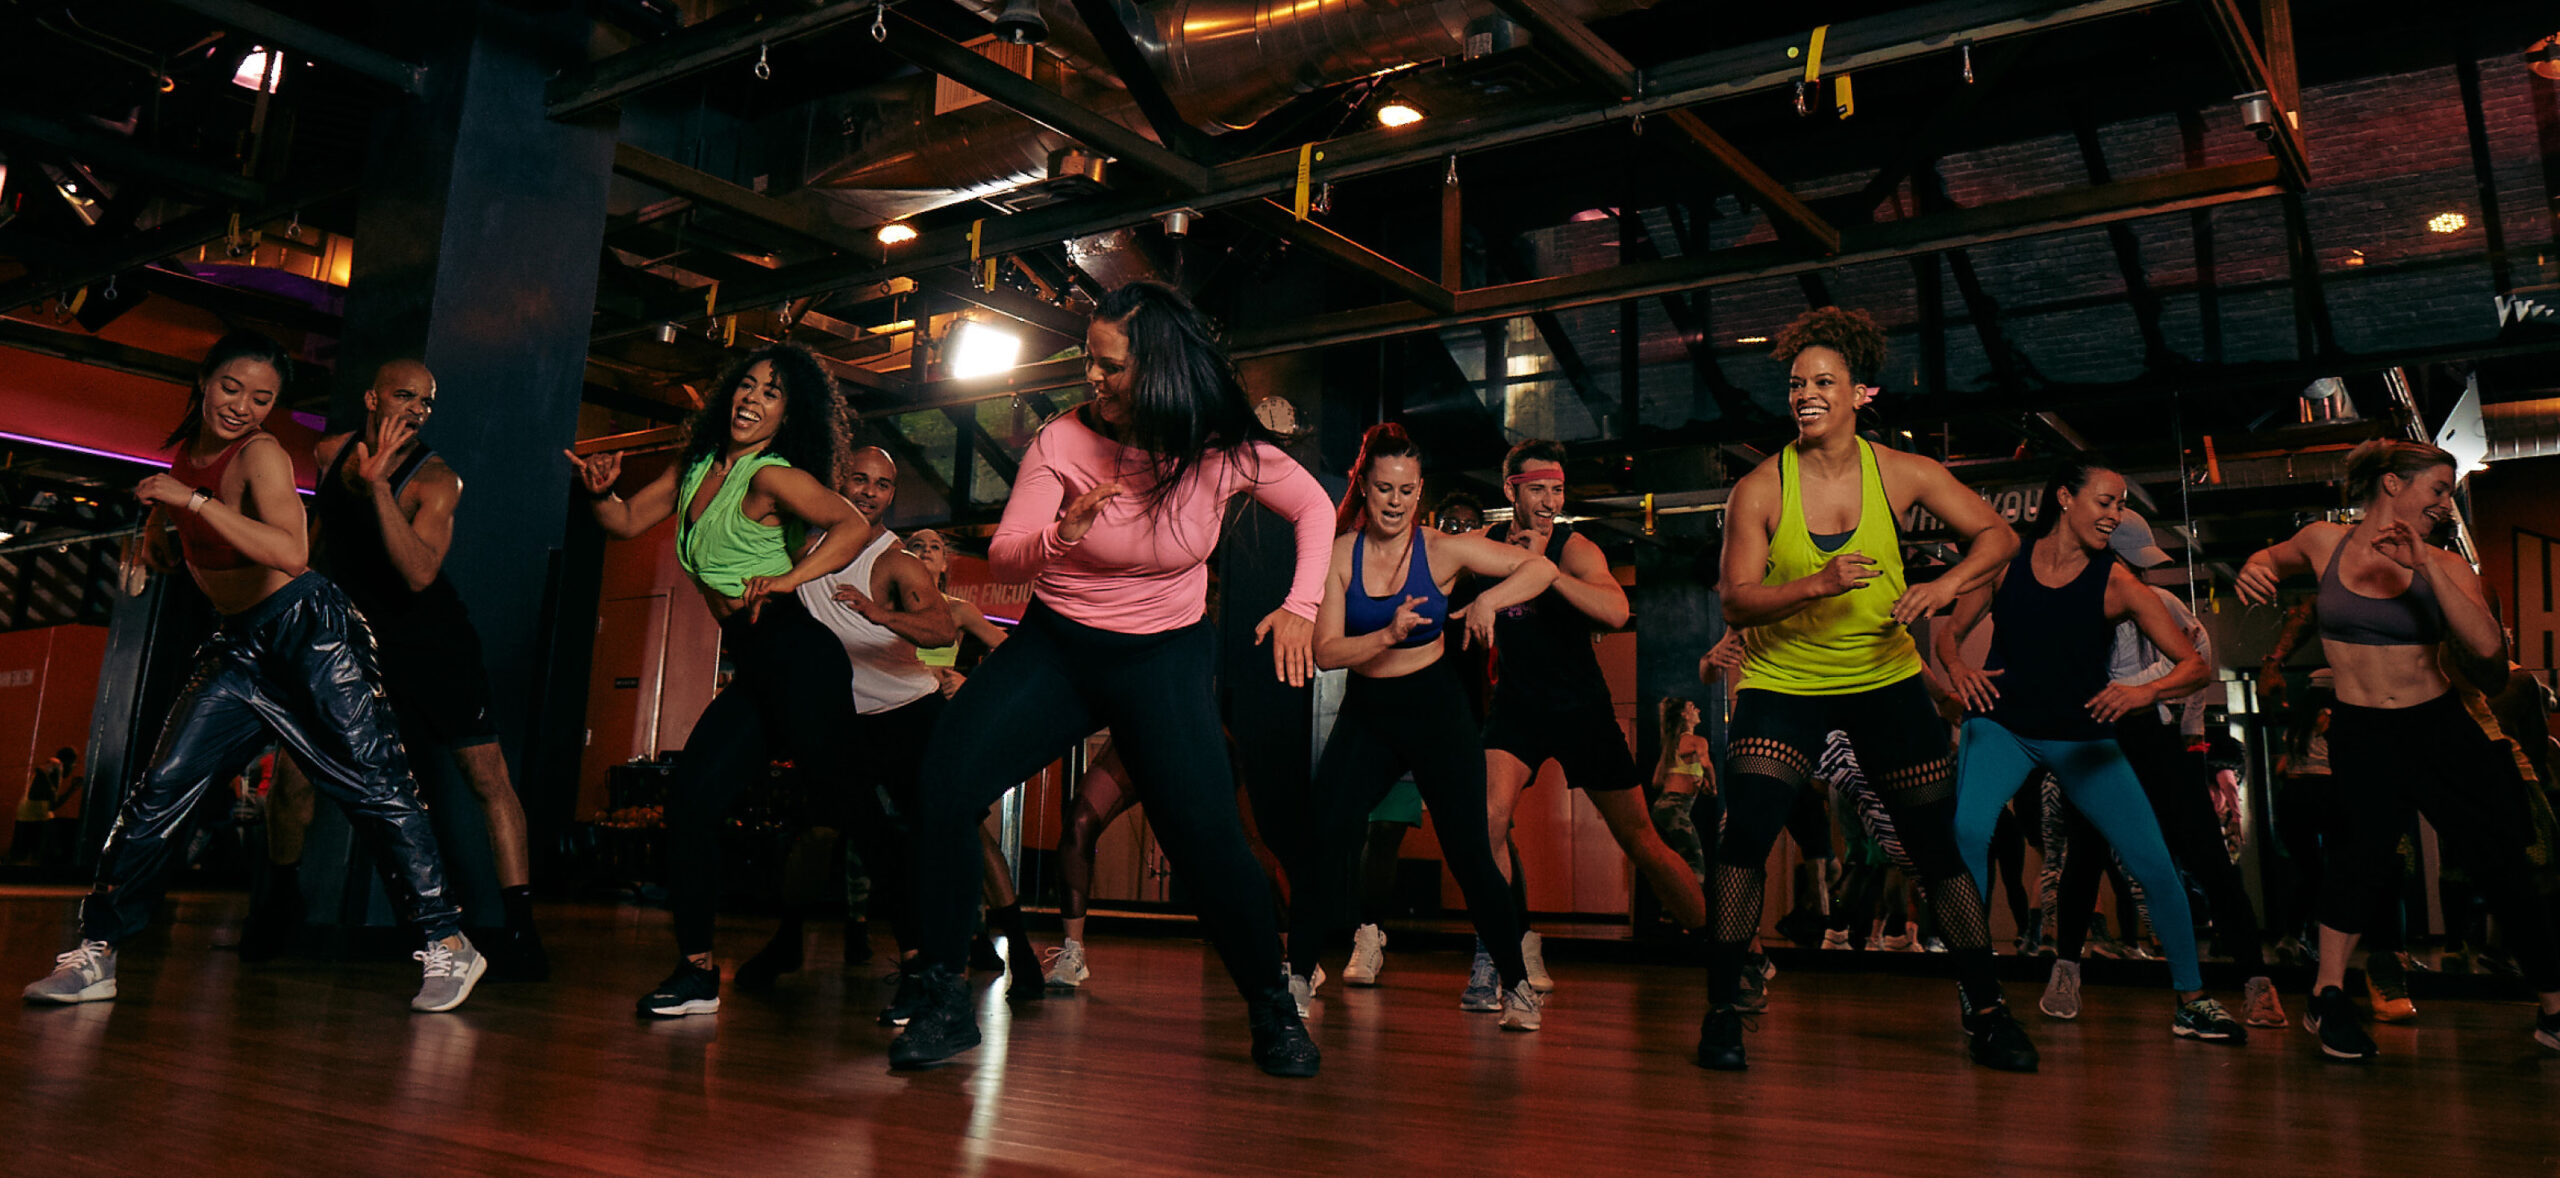 Dance Training Equipment - Train Your Way to Success